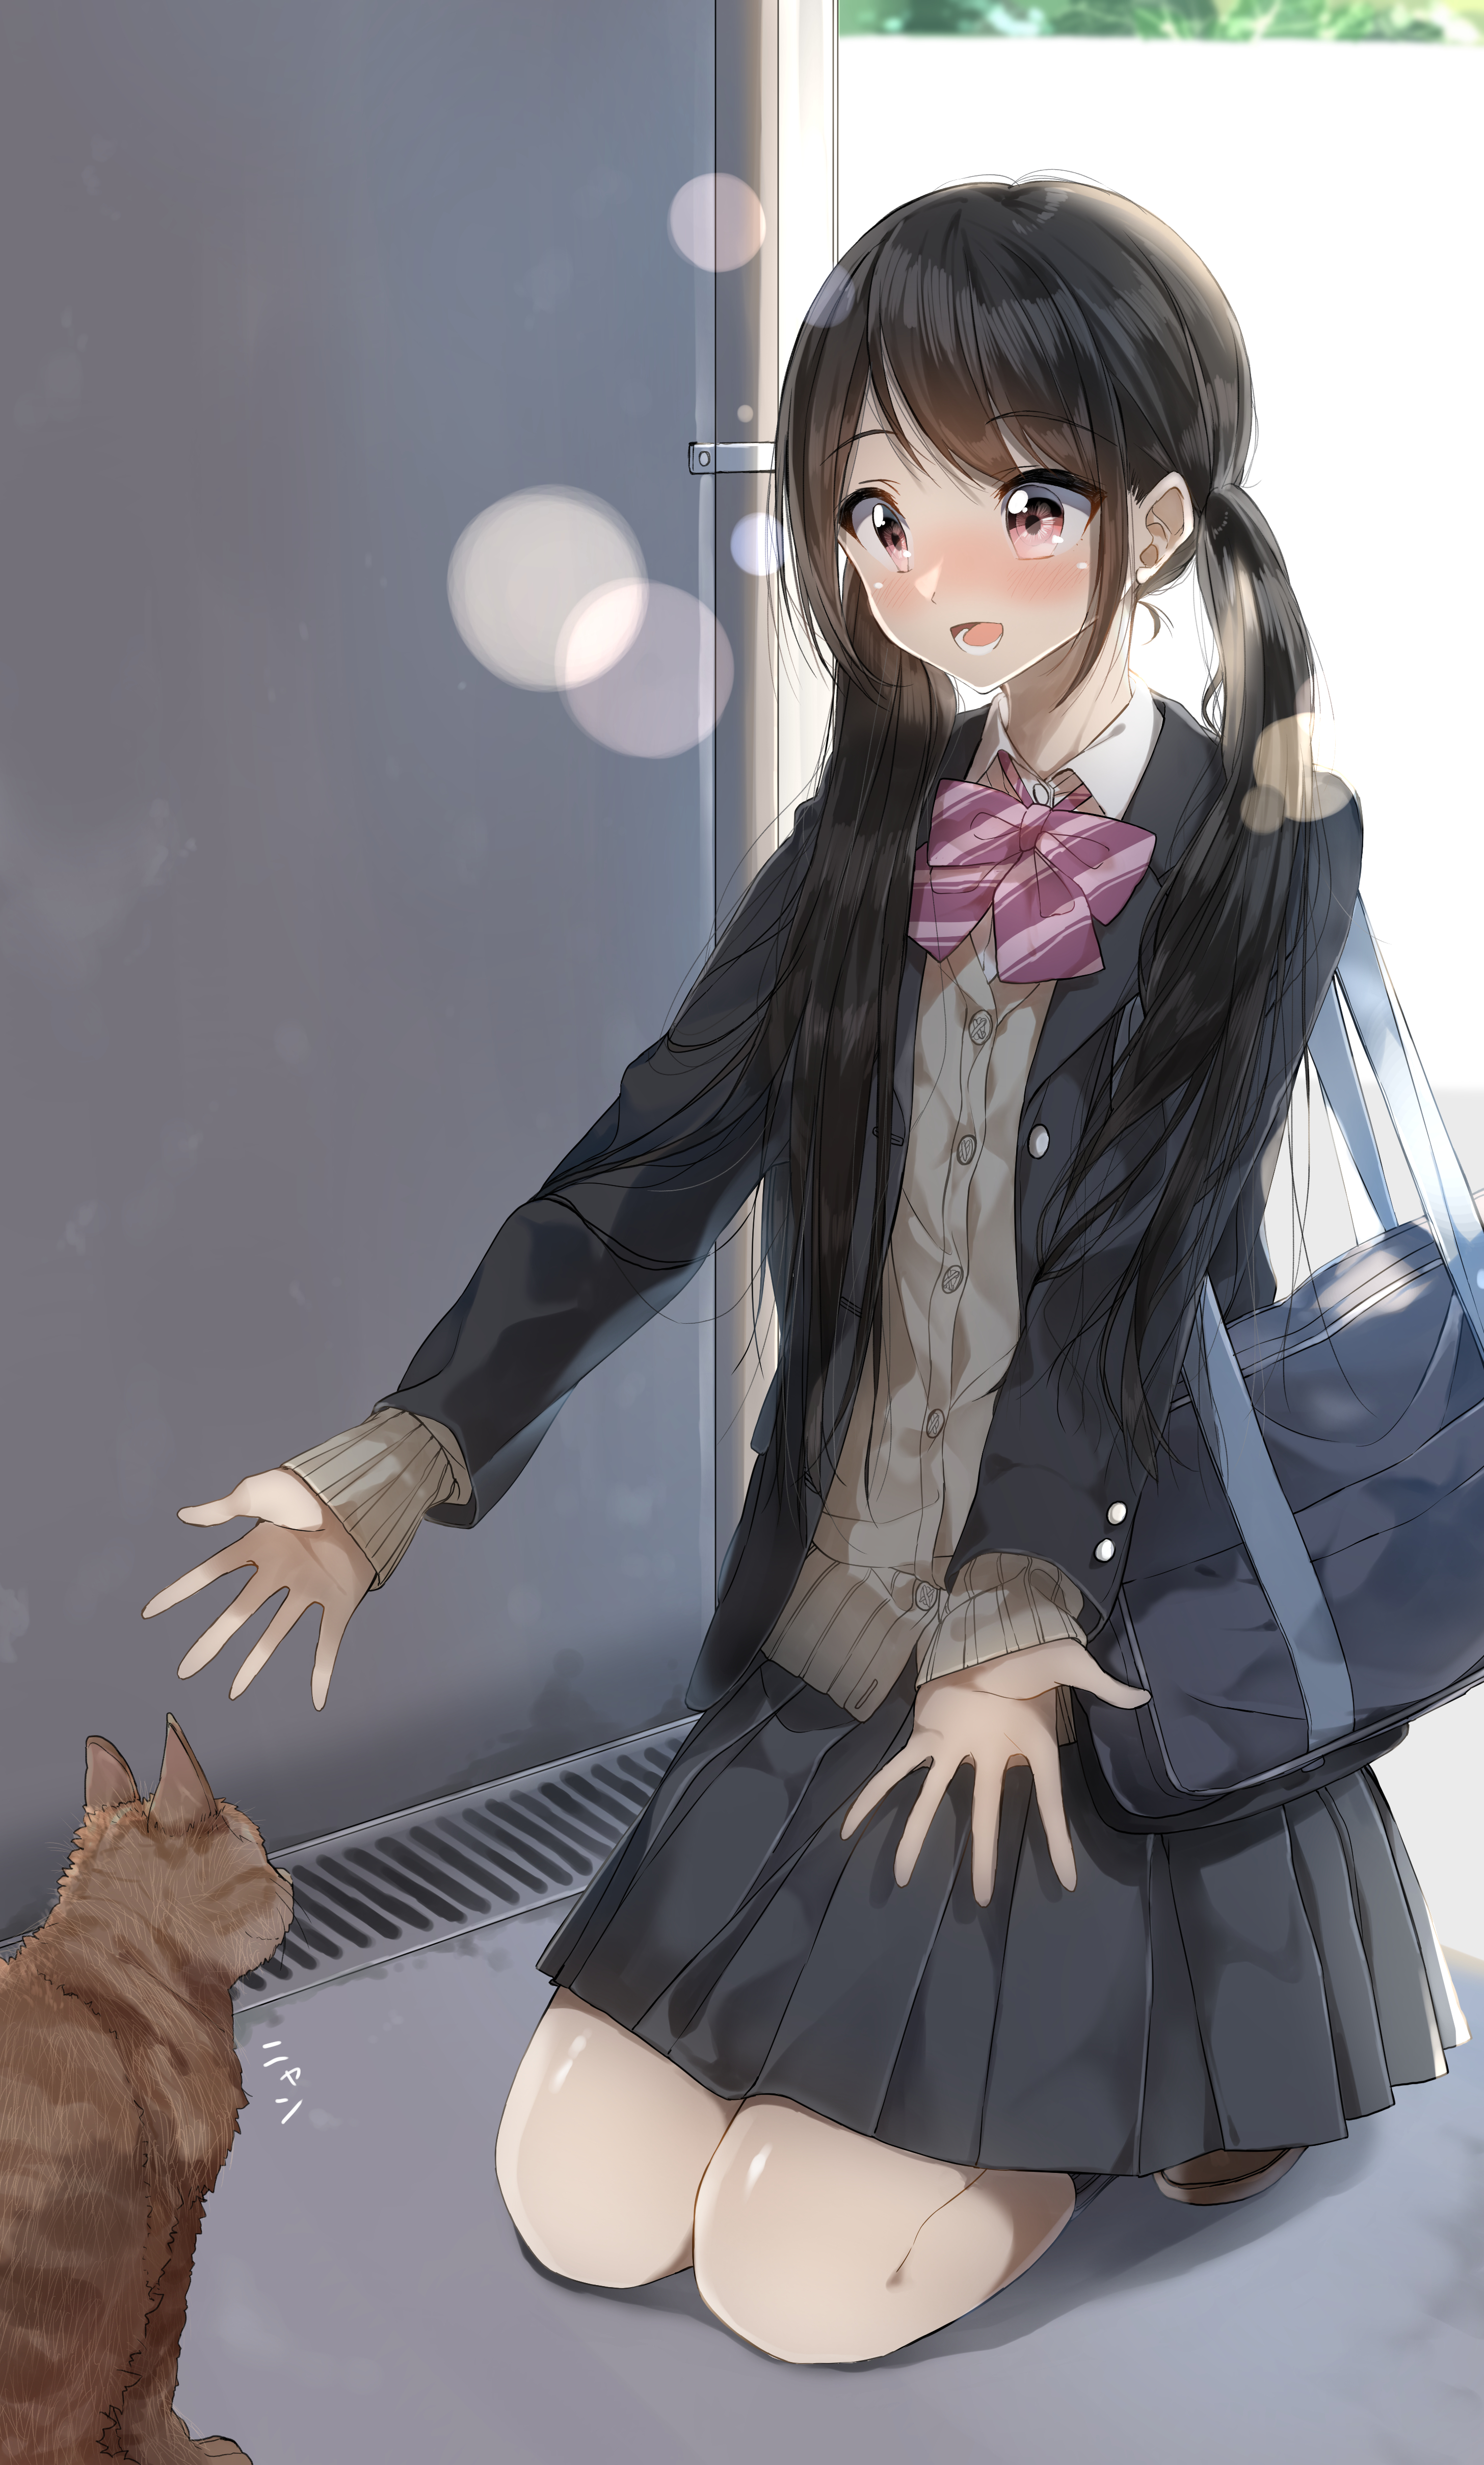 Anime 2912x4836 anime anime girls digital art artwork 2D portrait display RailgunKy school uniform cats dark hair long hair twintails blushing kneeling